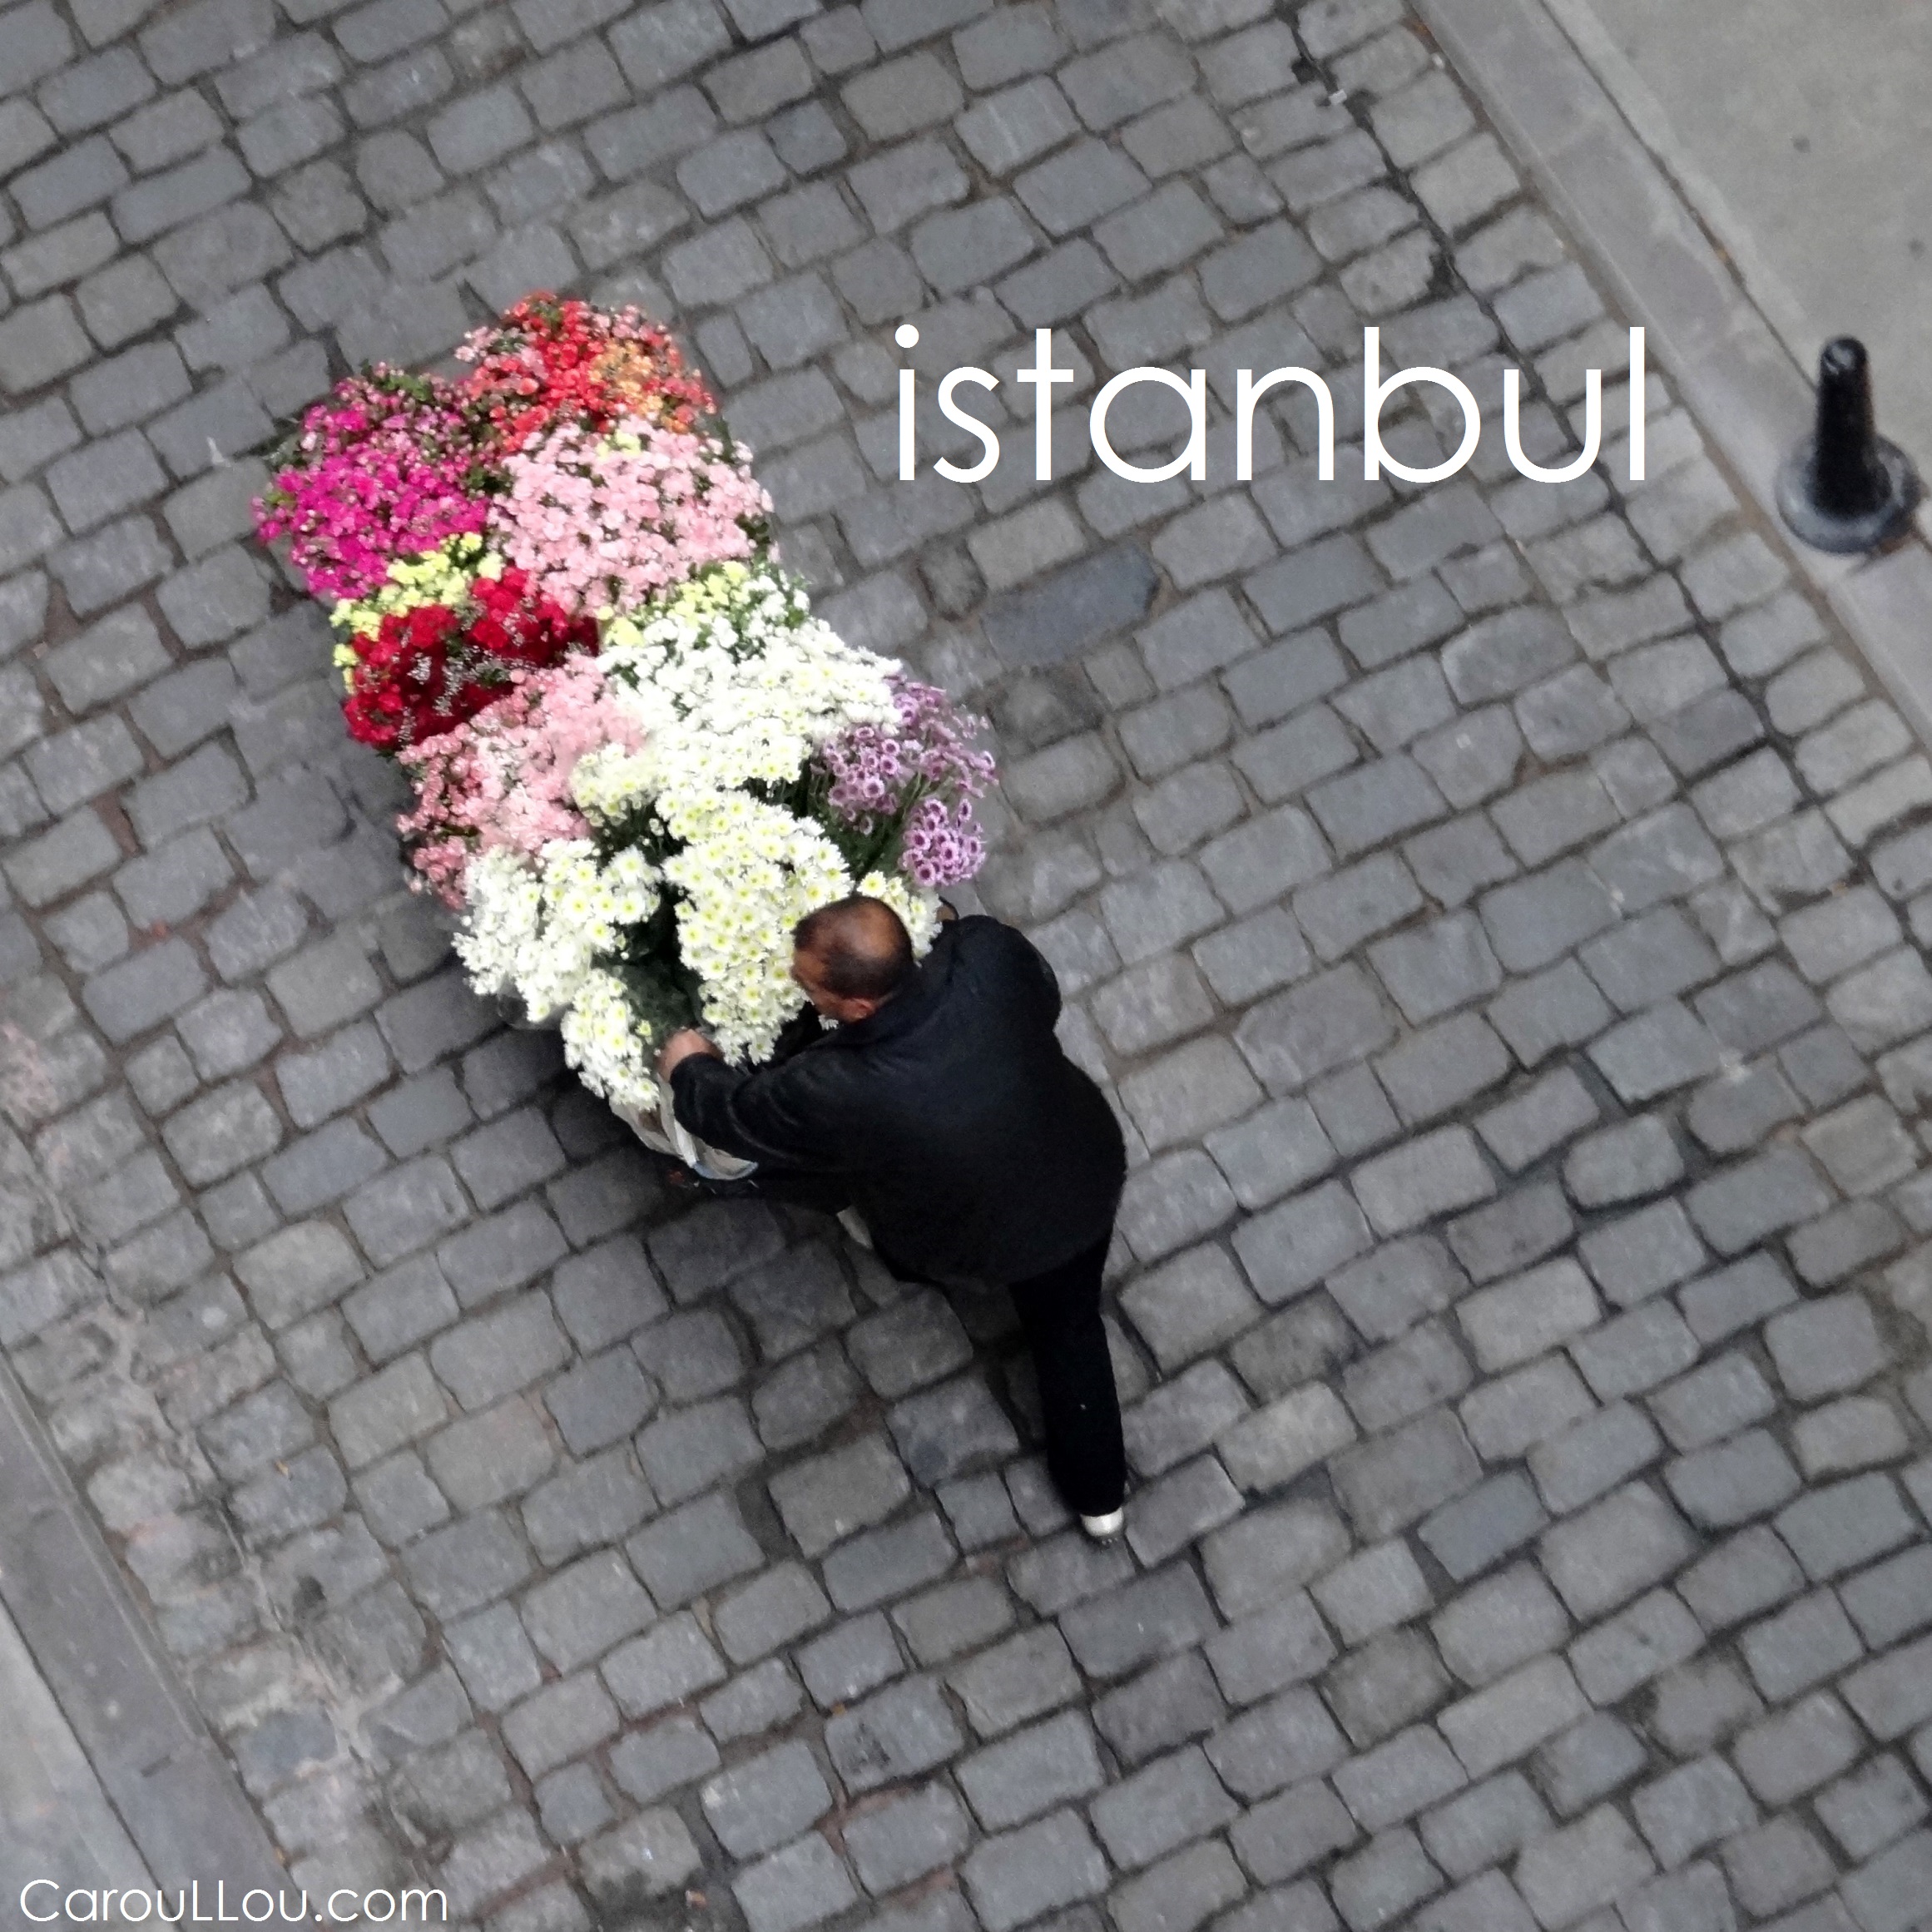 CarouLLou.com Carou LLou in Istanbul Turkey flowers +--